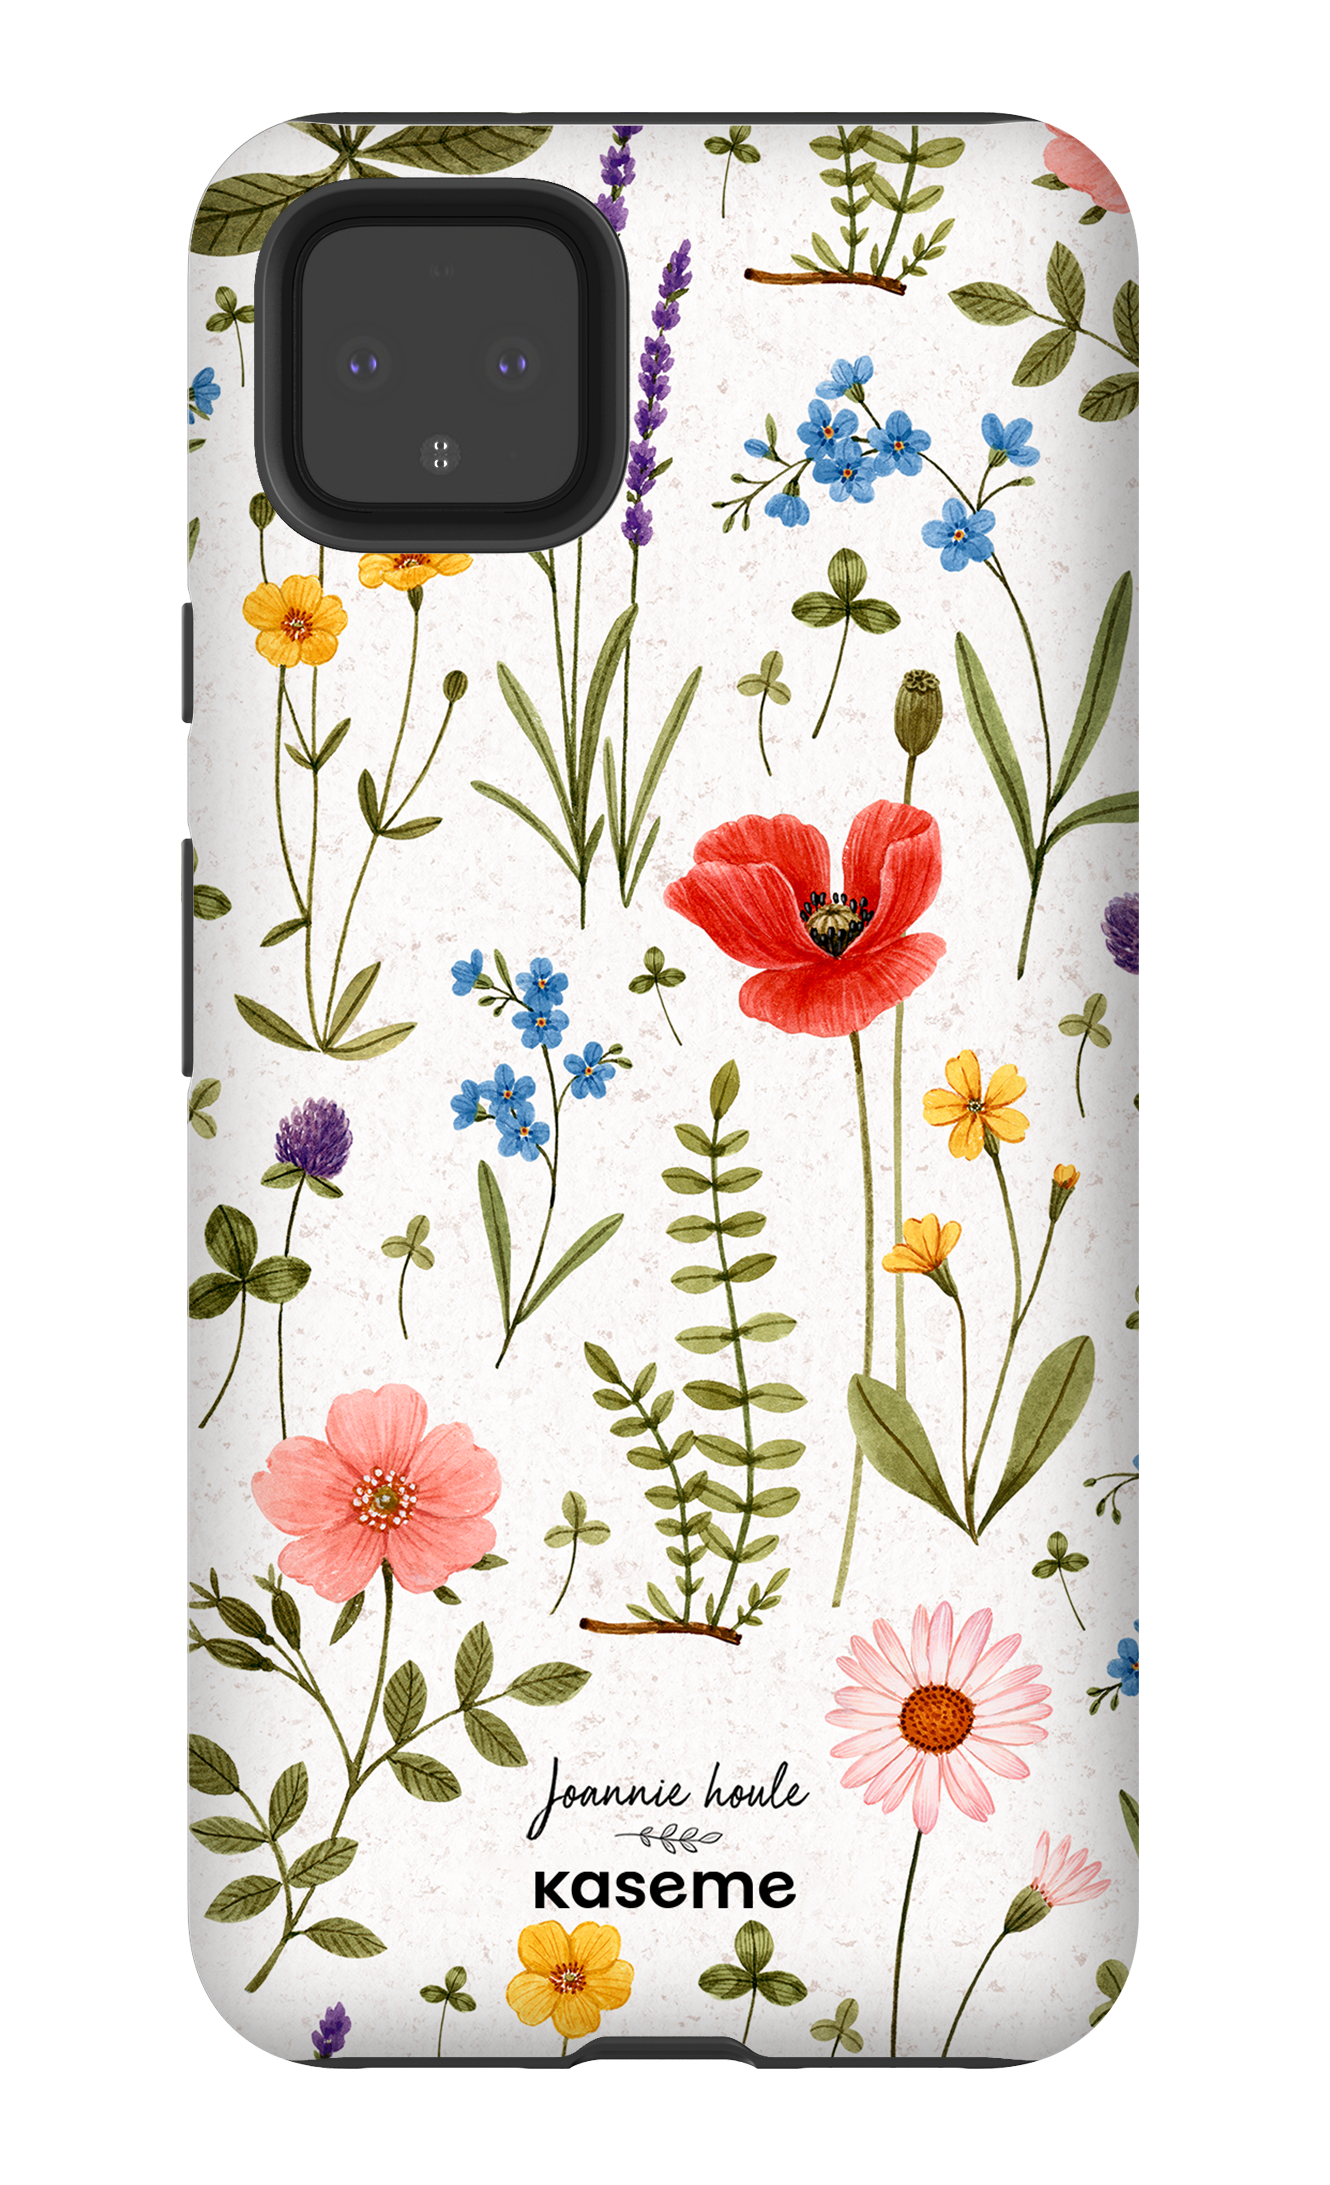 Wild Flowers by Joannie Houle - Google Pixel 4 XL